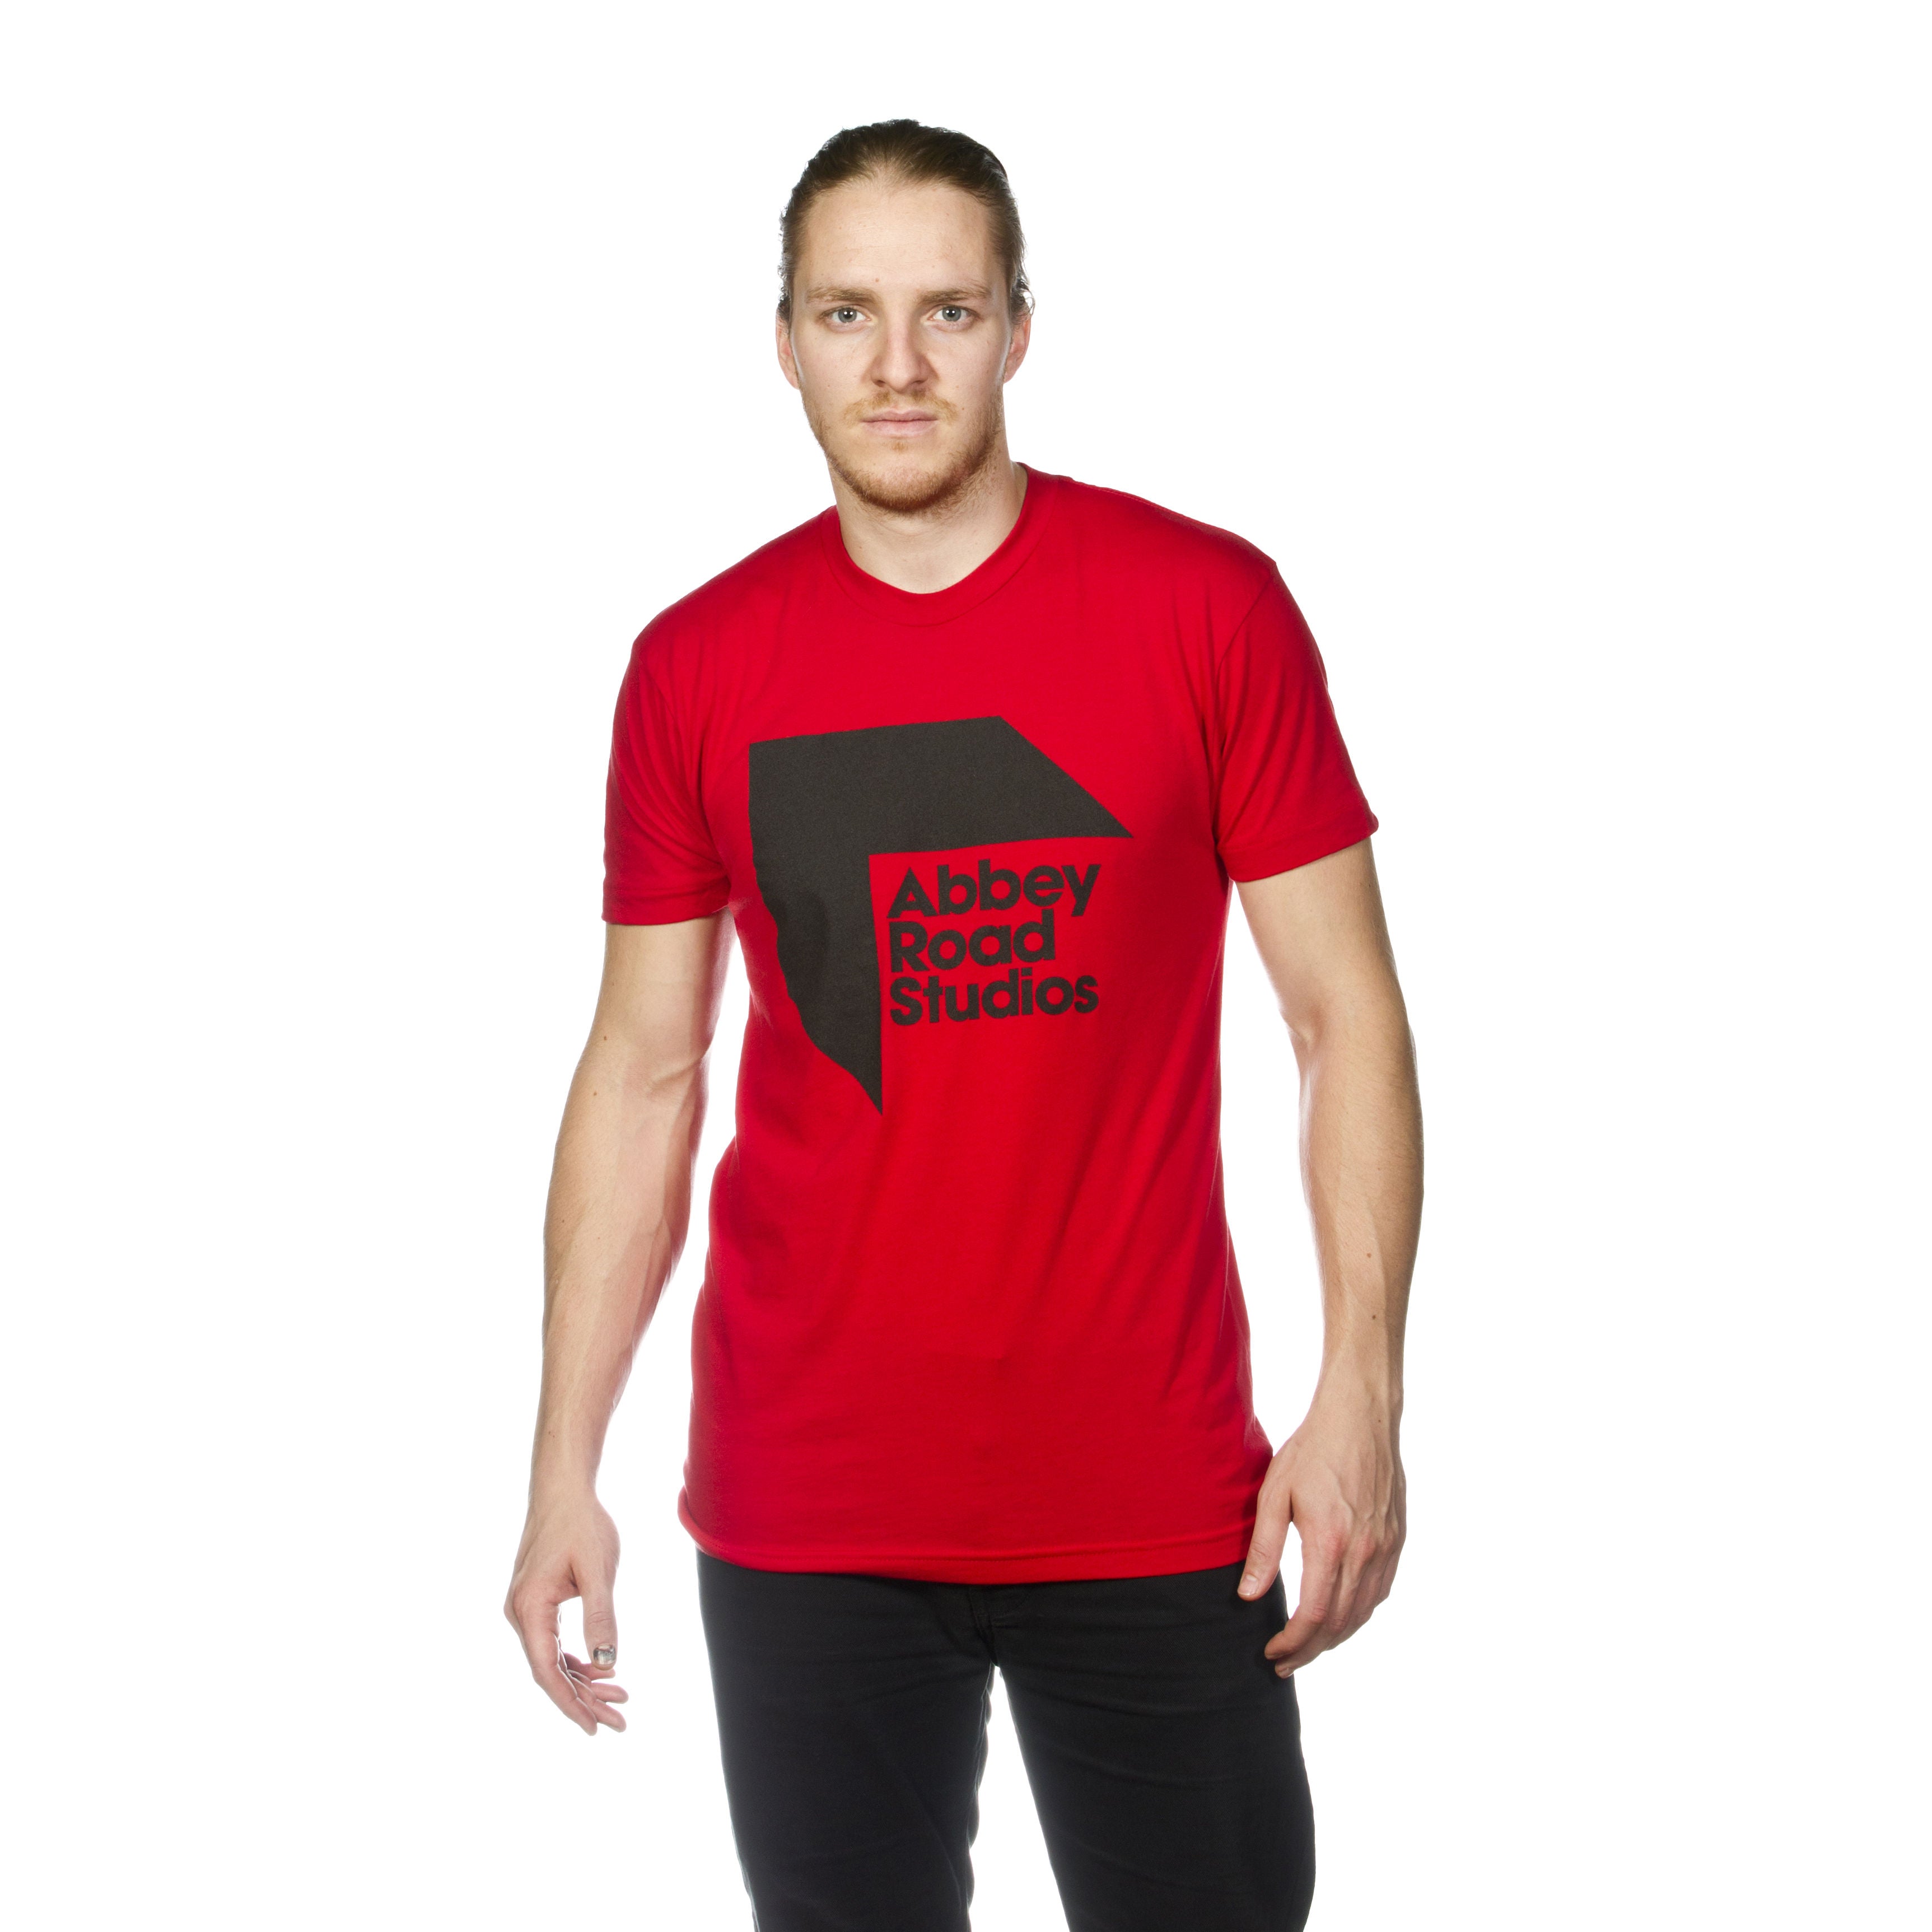 Abbey Road Studios - Abbey Road Red T-Shirt